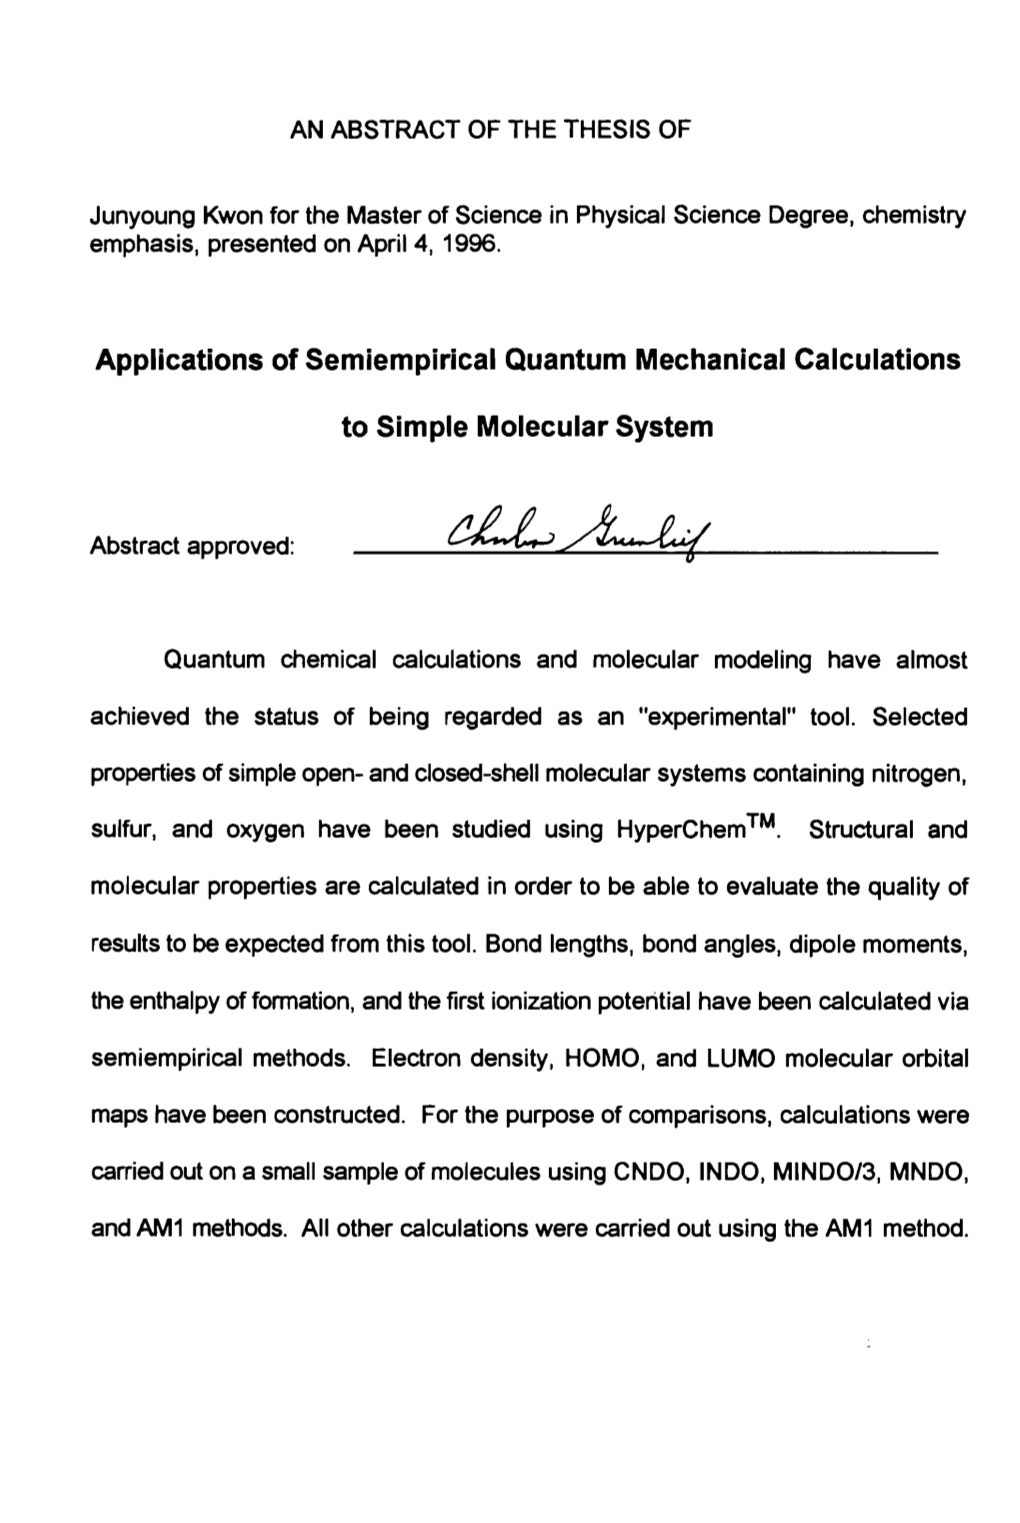 Applications of Semiempirical Quantum Mechanical Calculations